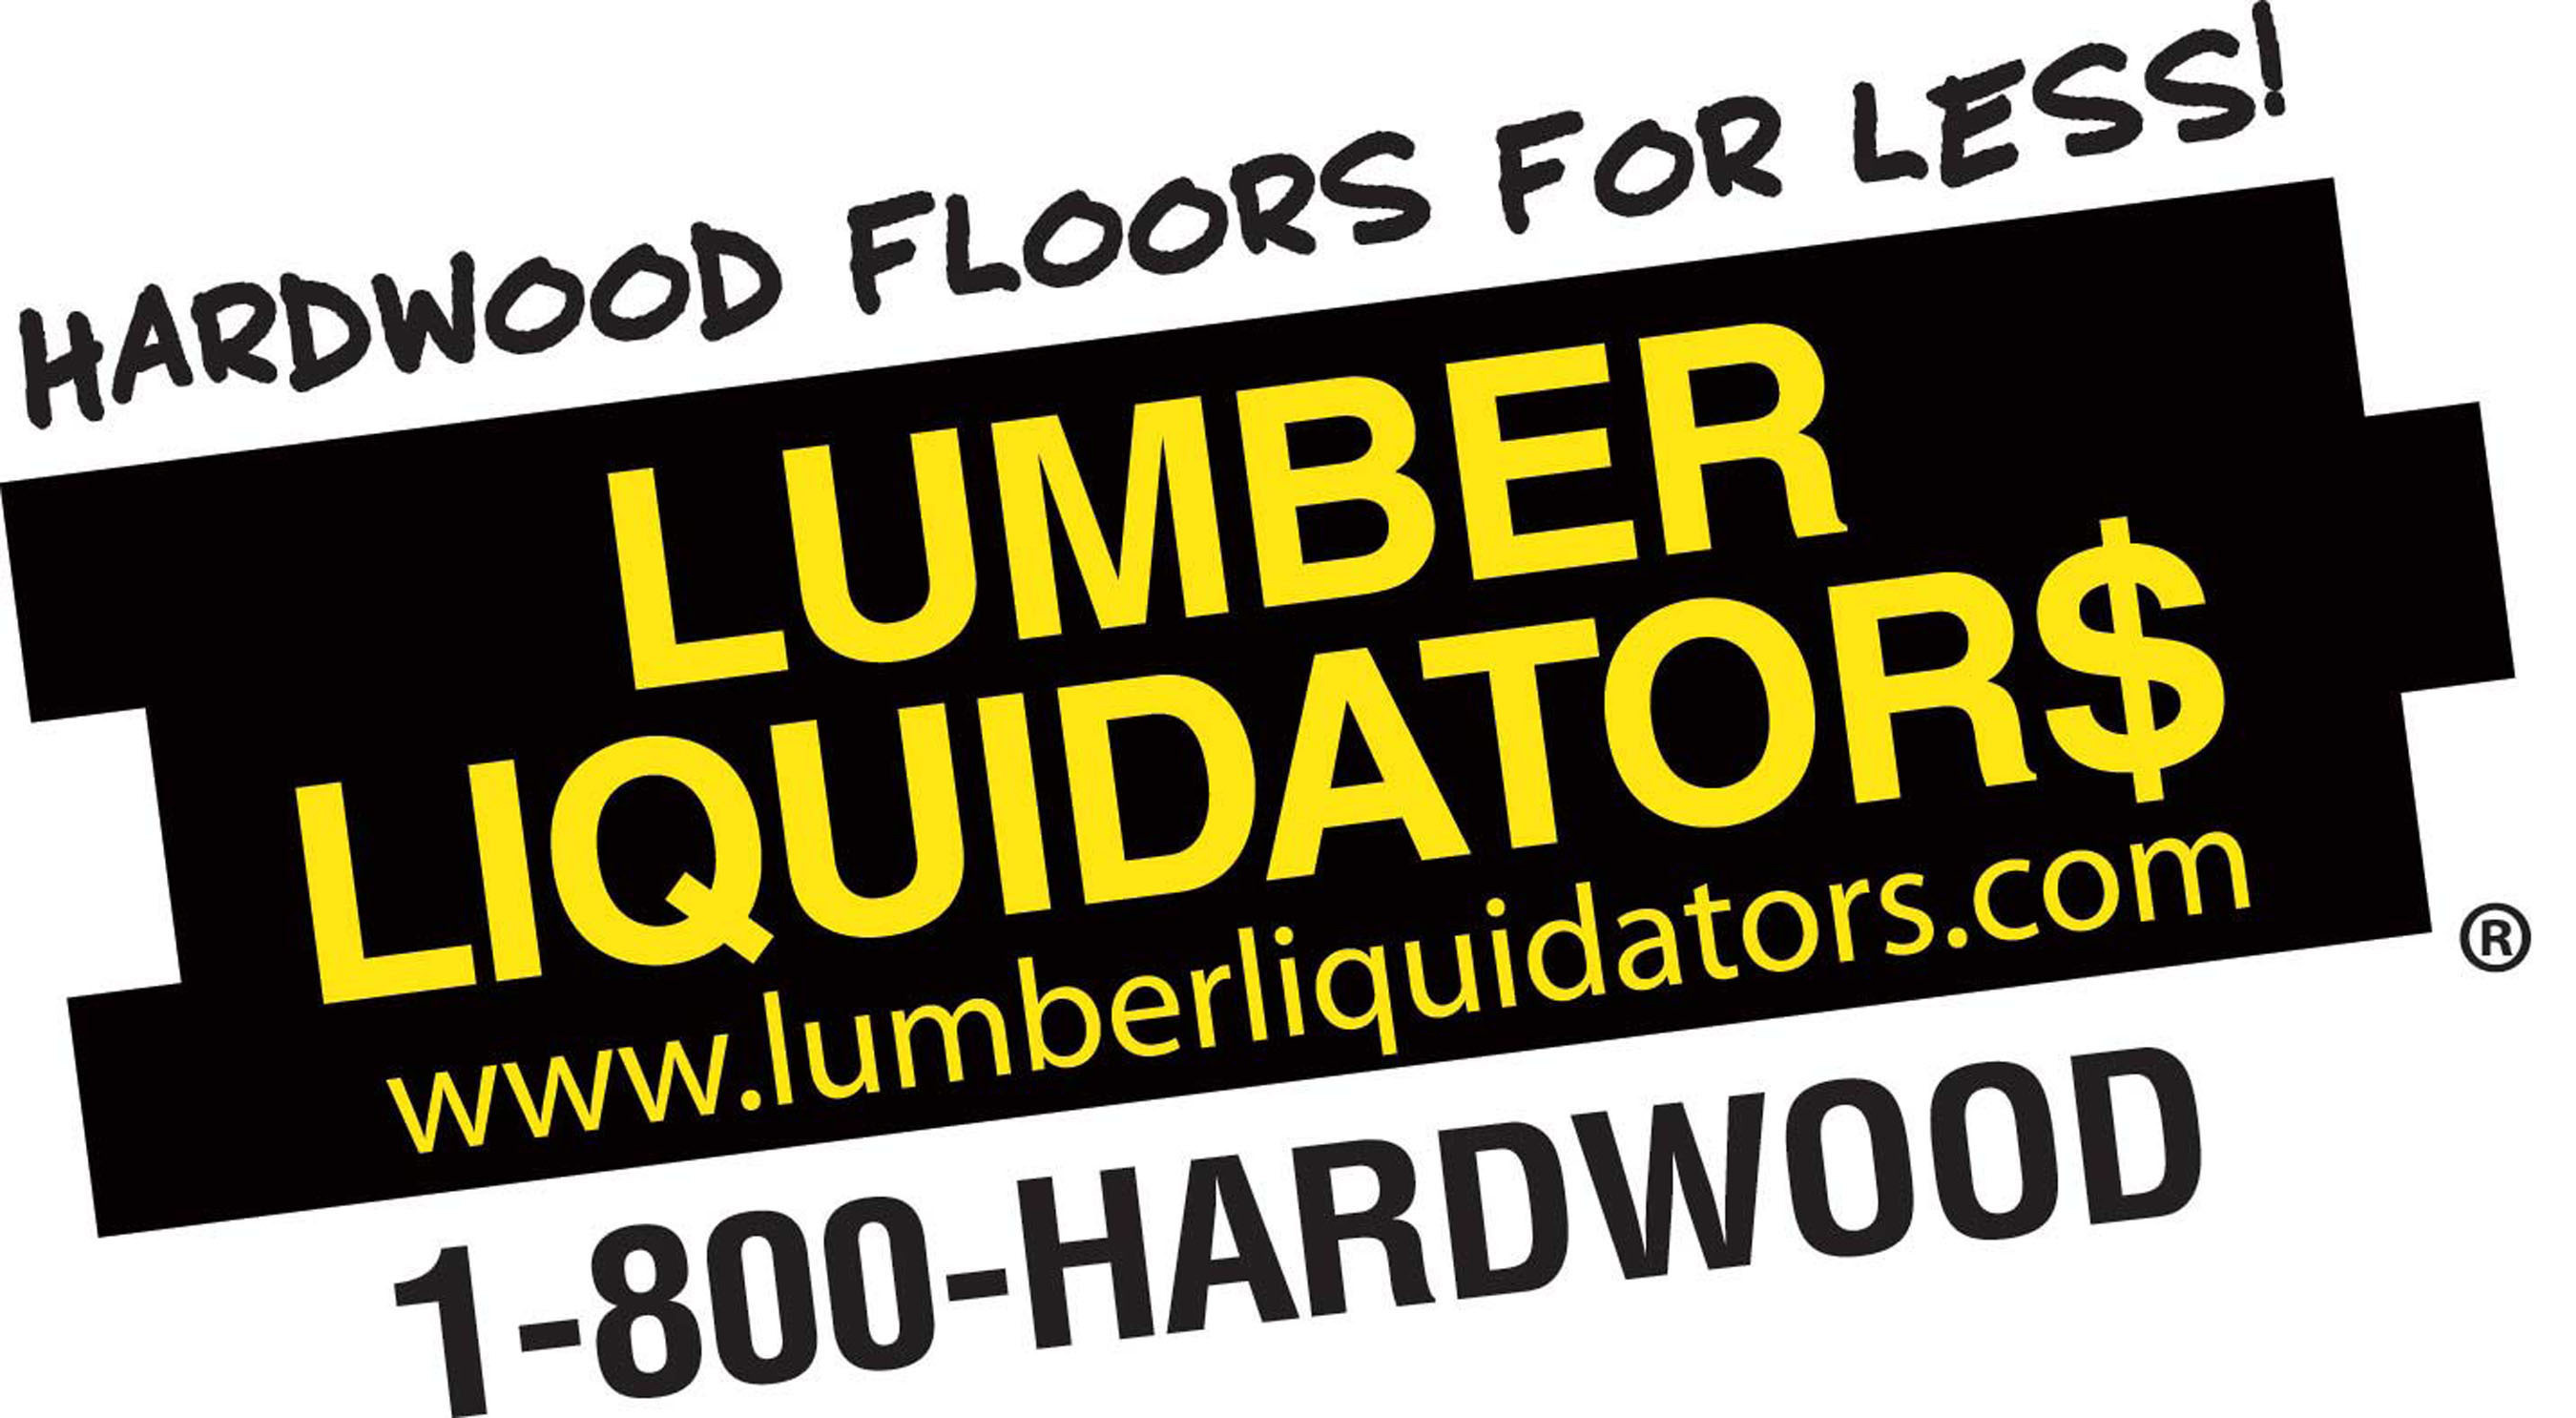 lumber liquidators.com